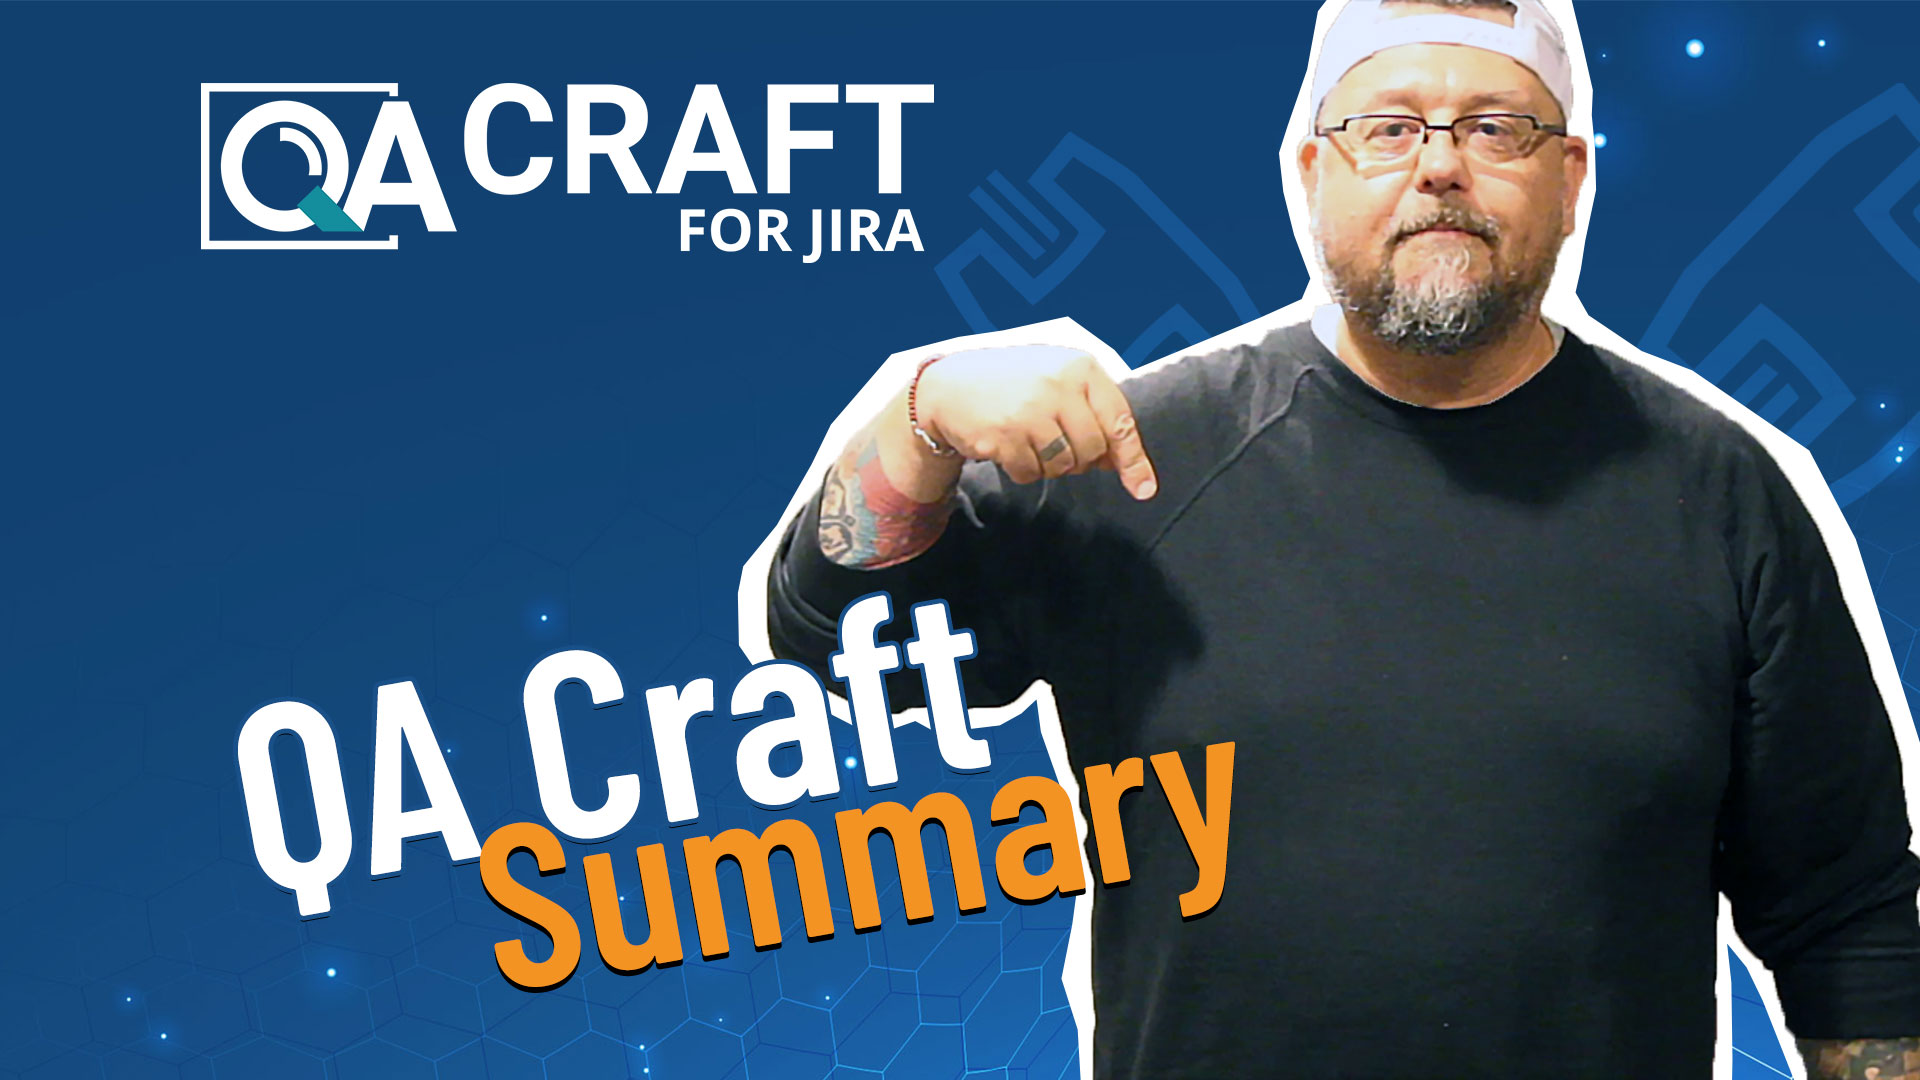 QA Craft for Jira - testing tool